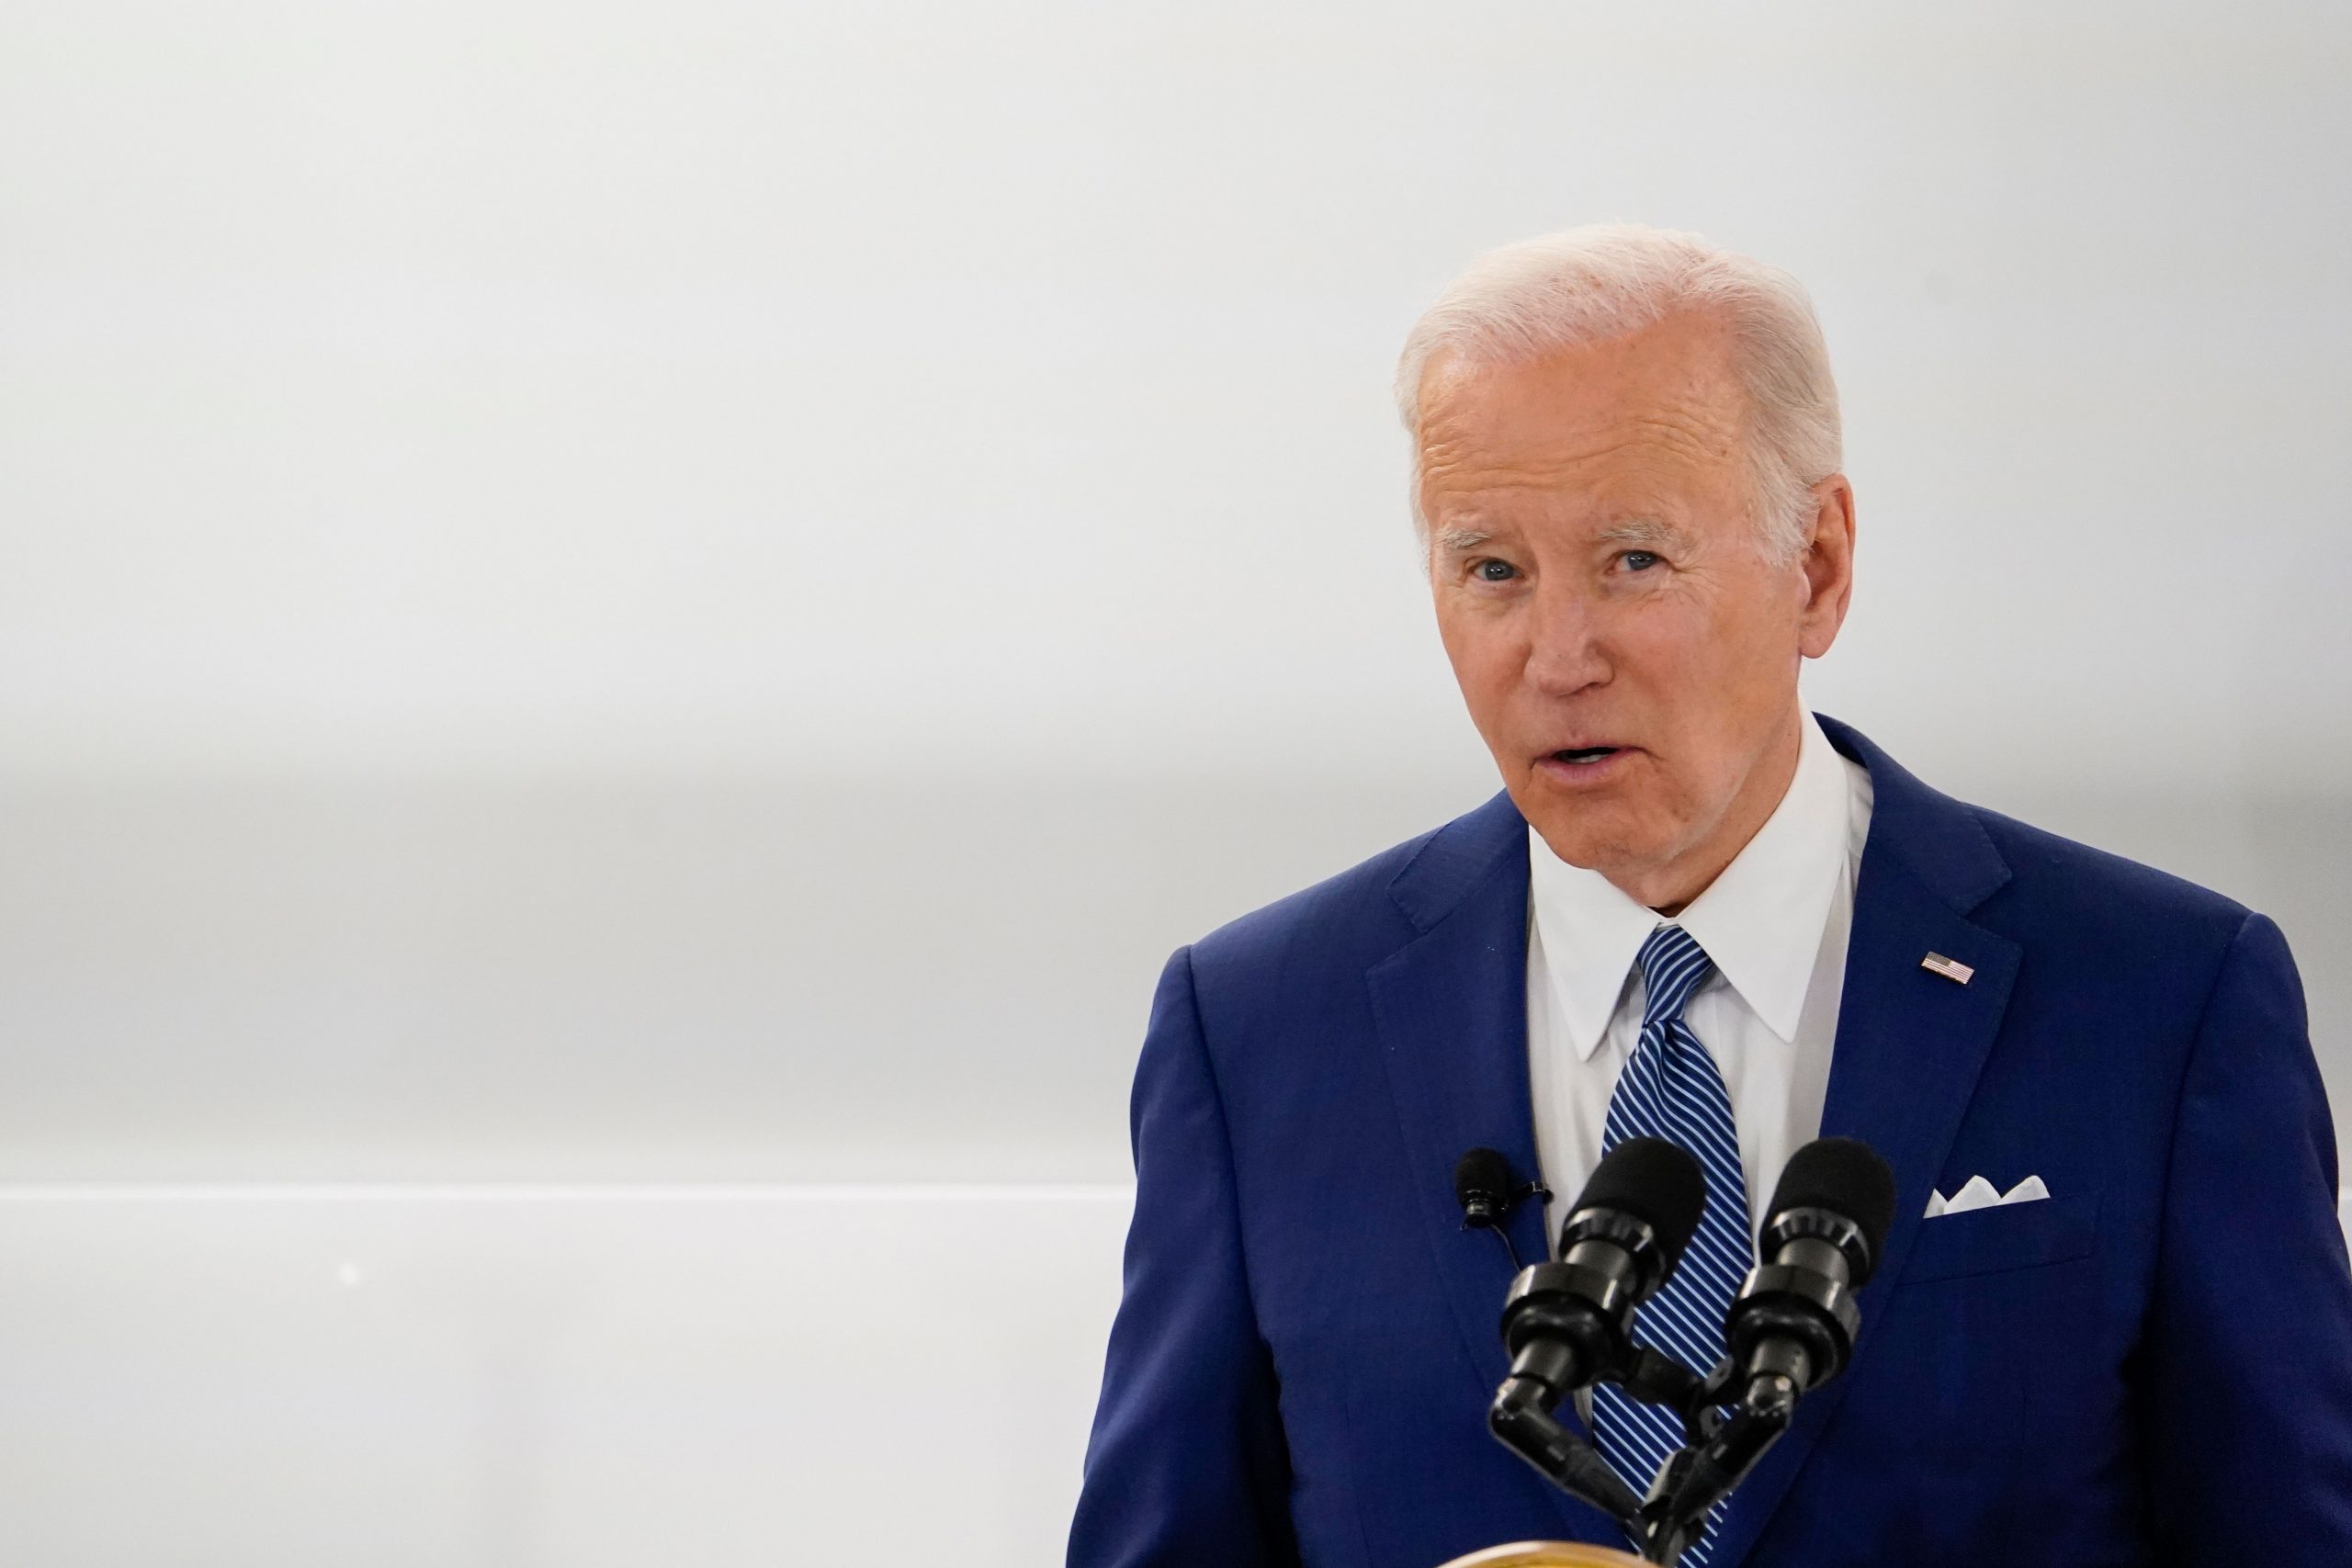 Joe Biden to host leaders of ASEAN nations in Washington on May 12-13